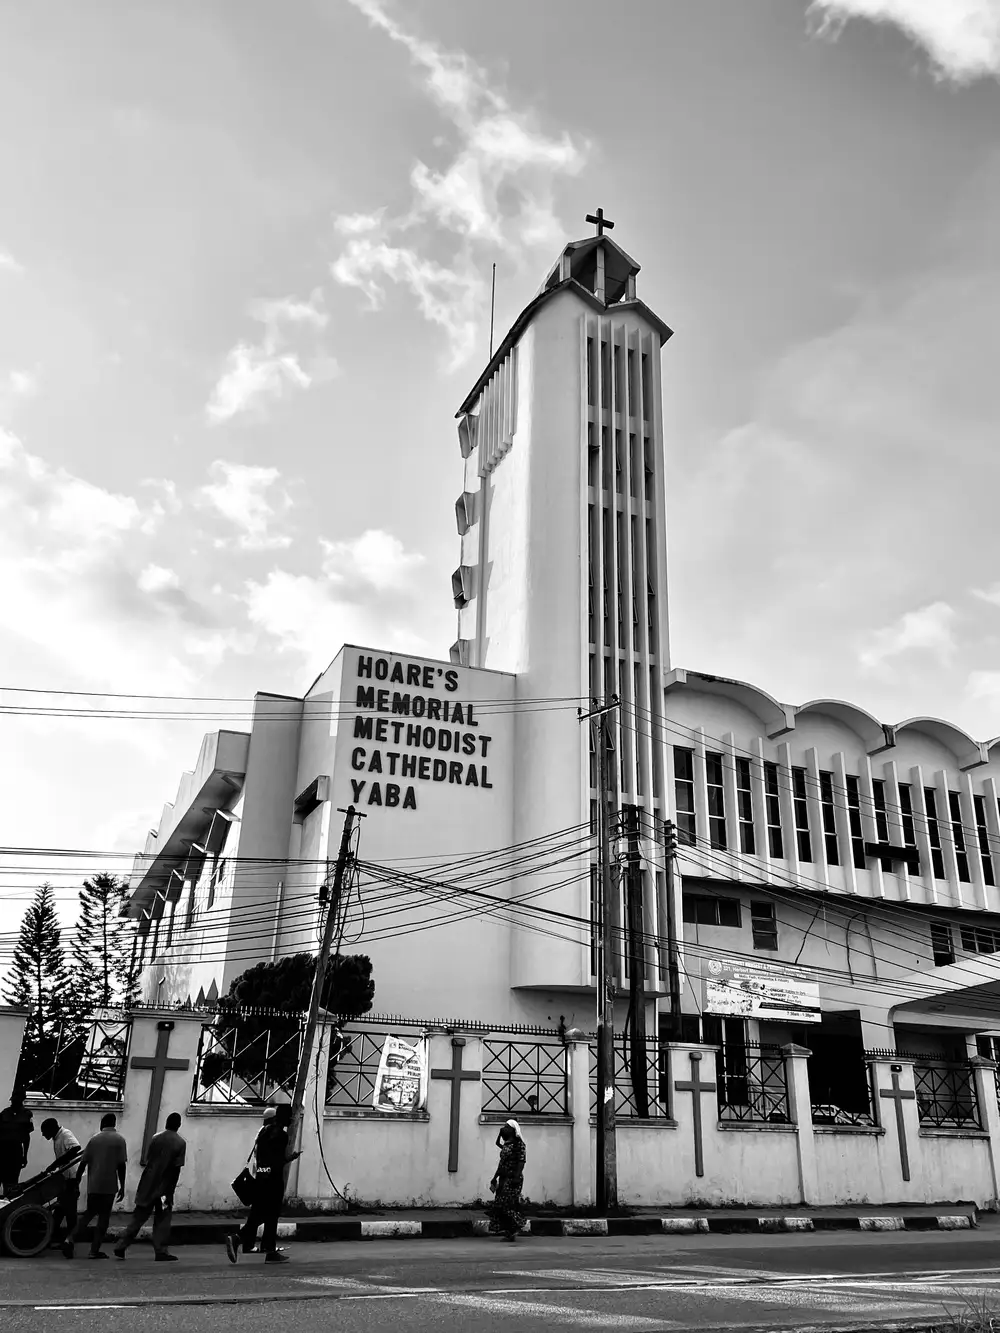 Hoare’s Memorial Methodist Cathedral Yaba, Lagos, Nigeria.